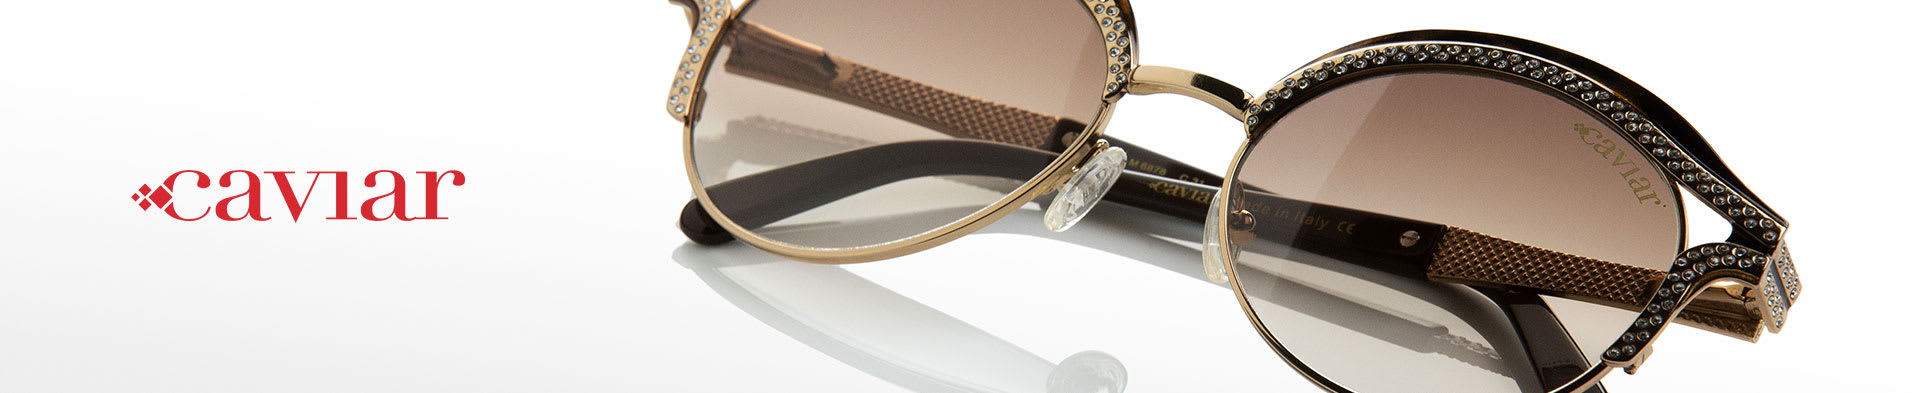 Shop Caviar Sunglasses - featuring M6878